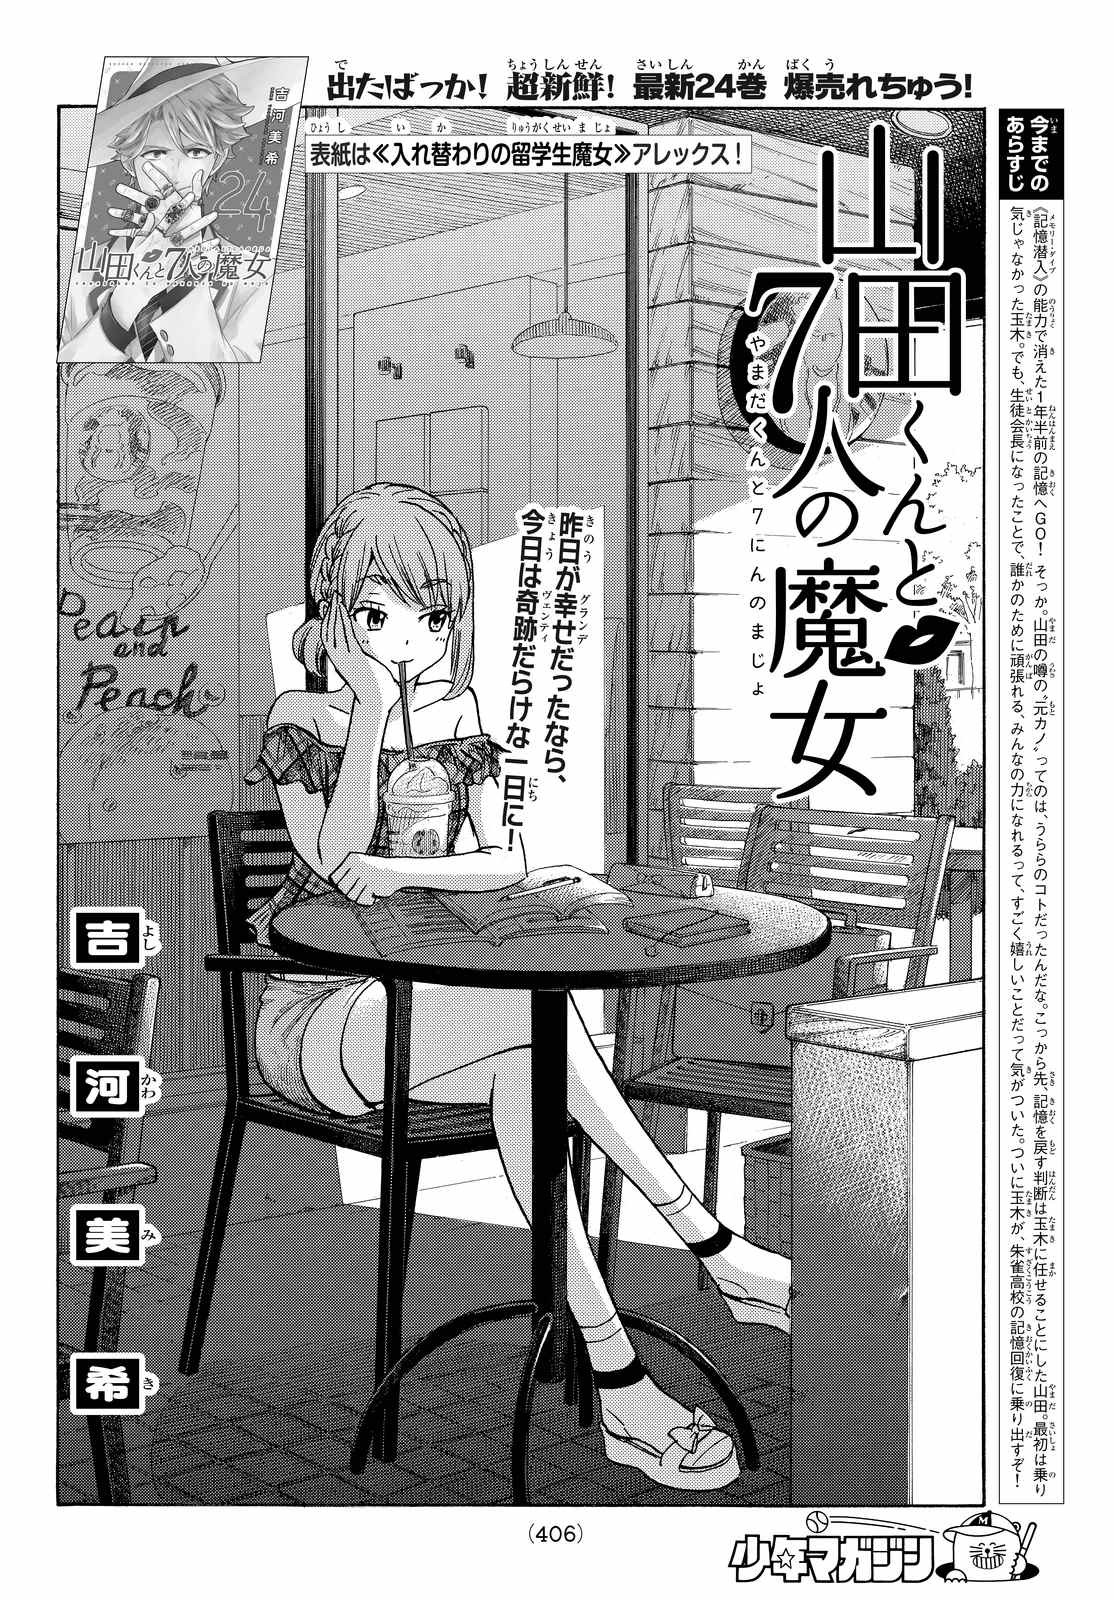 Yamada-kun to 7-nin no Majo - Chapter 215 - Page 2